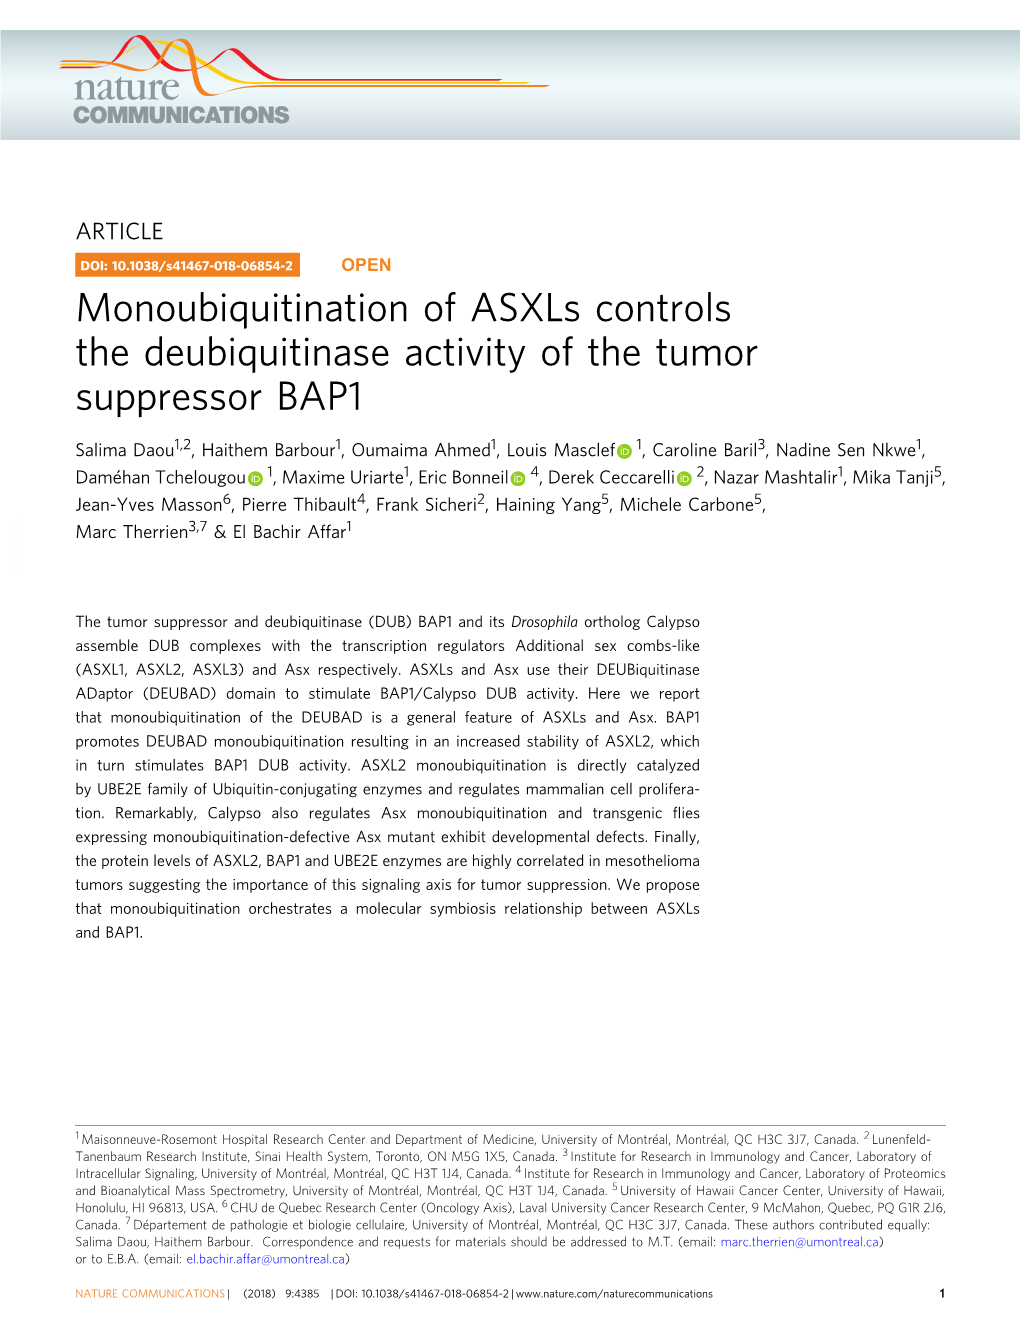 Monoubiquitination of Asxls Controls the Deubiquitinase Activity of the Tumor Suppressor BAP1